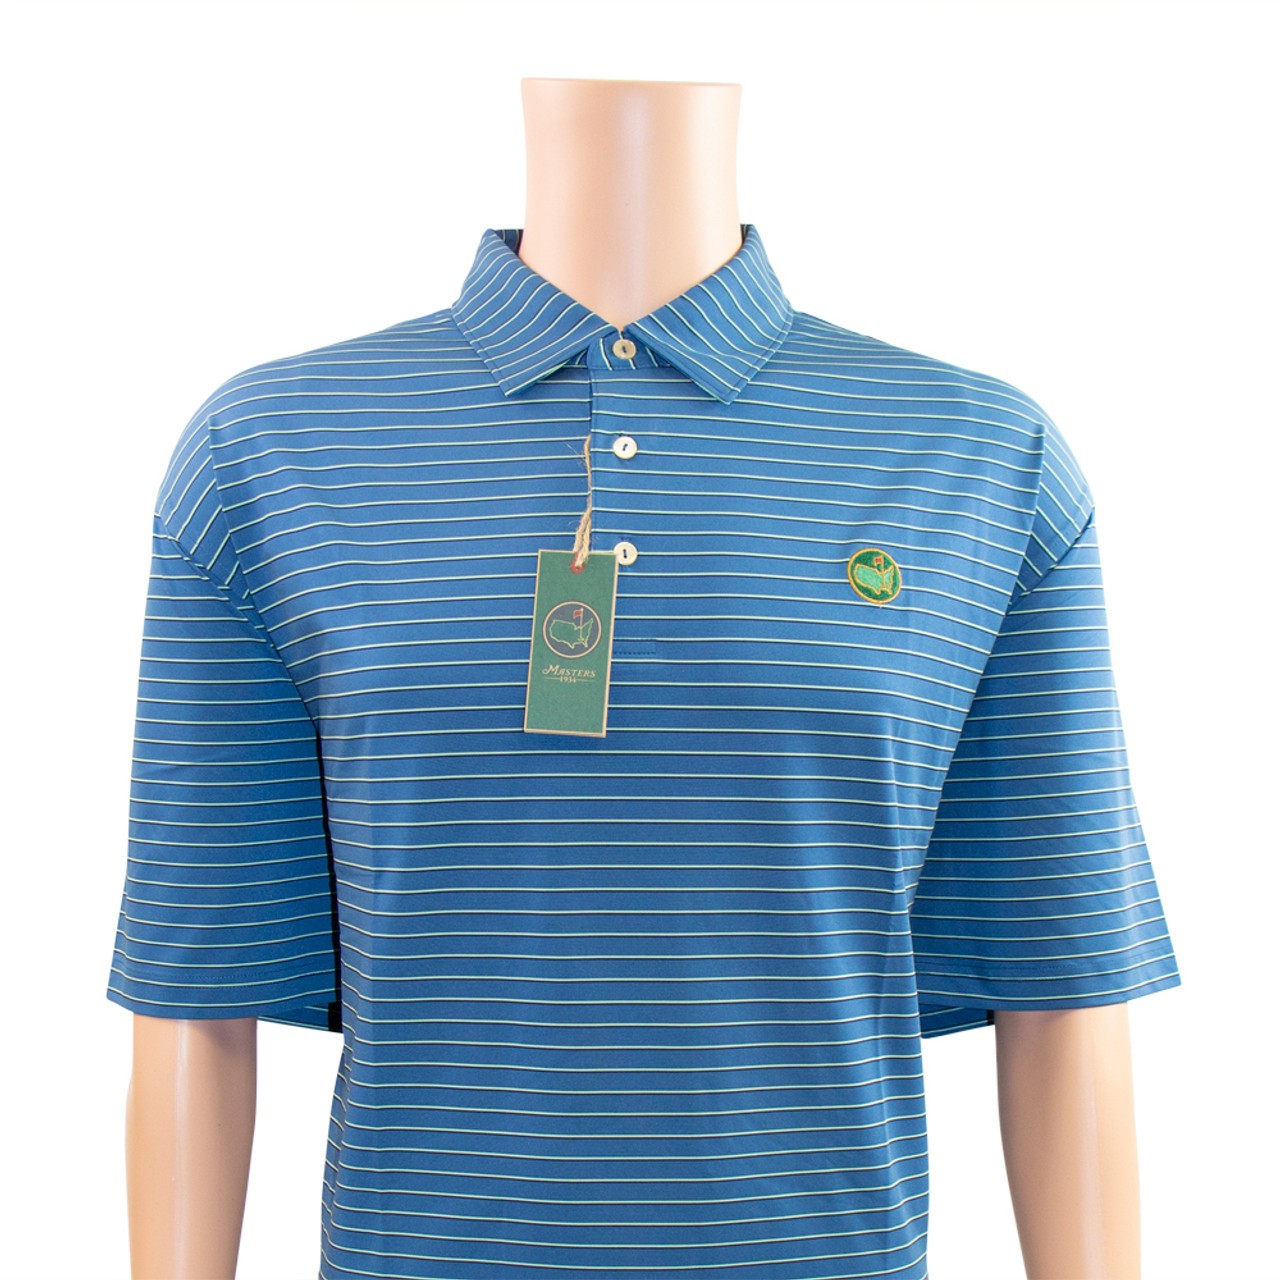 Berckmans Golf Polo Shirt - Cobalt Blue with Thin Mint and Navy Stripes